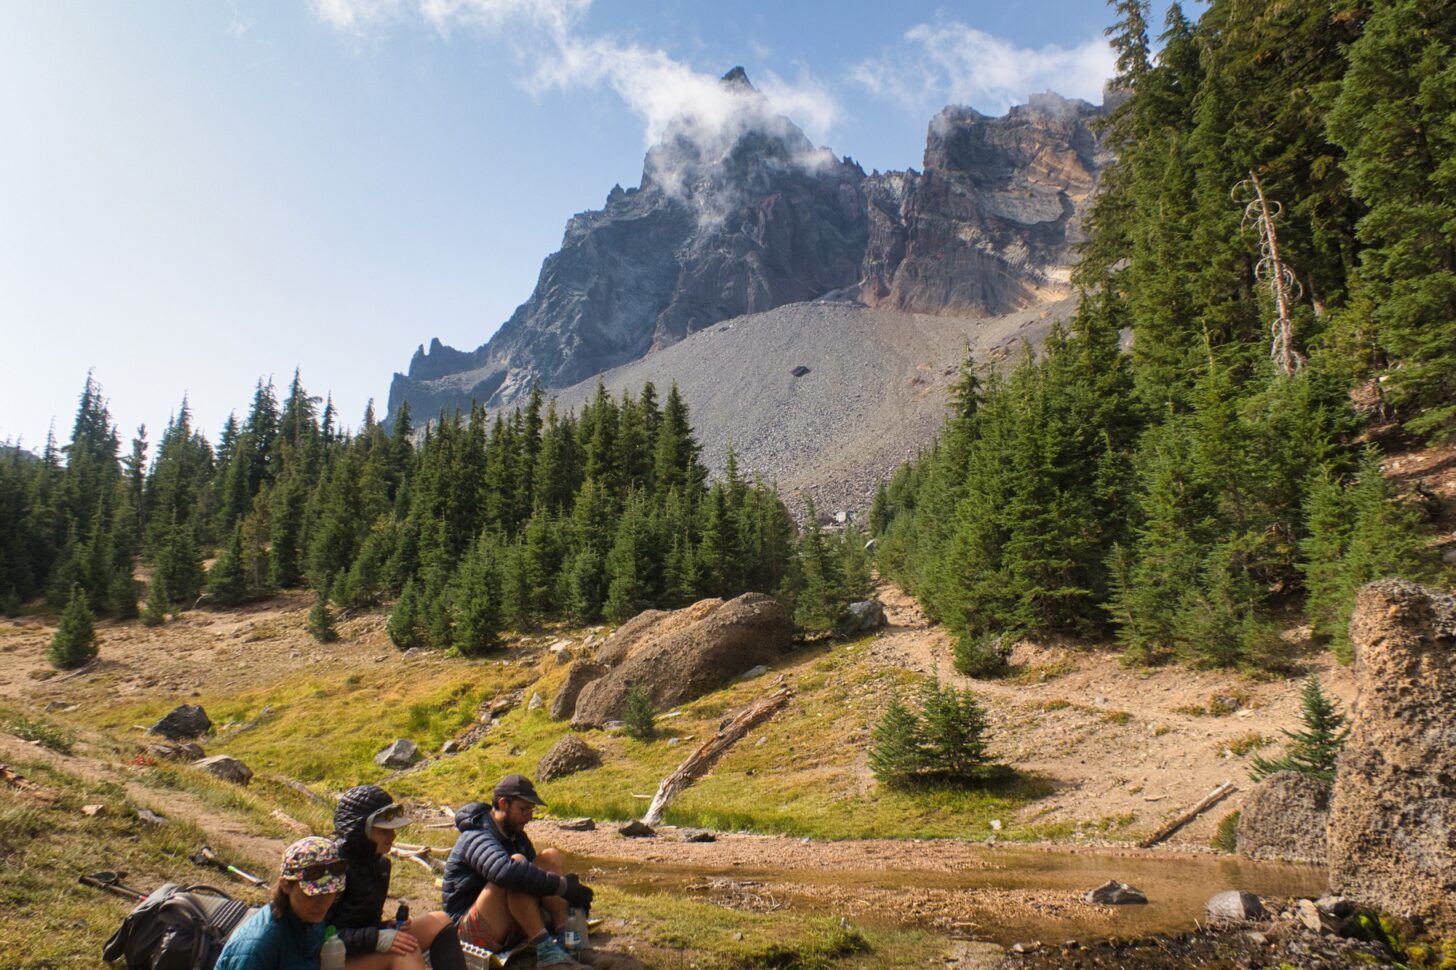 a group of hikers take a break below a rugged peak.